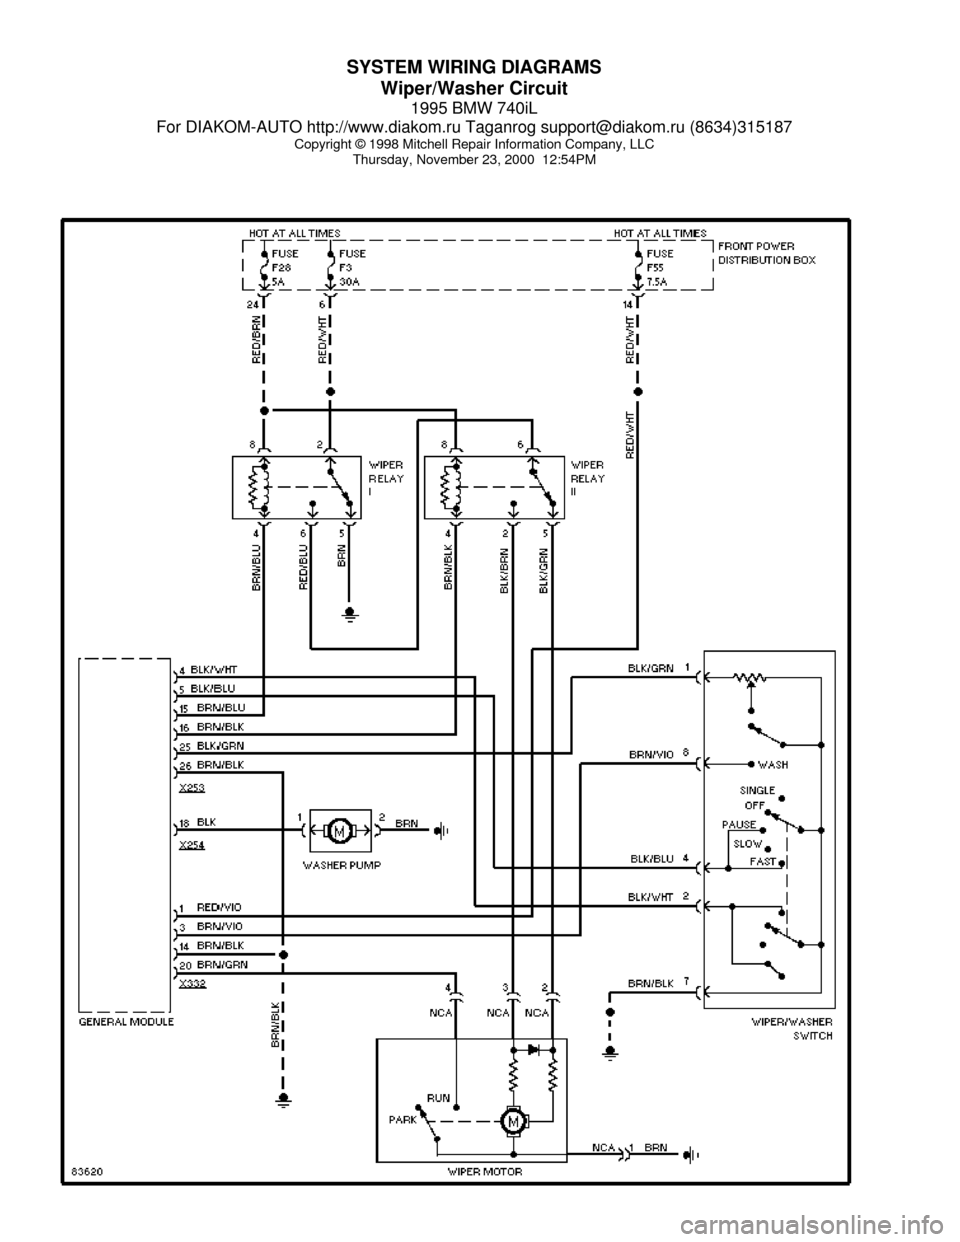 BMW 740il 1995 E38 System Wiring Diagrams SYSTEM WIRING DIAGRAMS
Wiper/Washer Circuit
1995 BMW 740iL
For DIAKOM-AUTO http://www.diakom.ru Taganrog support@diakom.ru (8634)315187
Copyright © 1998 Mitchell Repair Information Company, LLC
Thurs